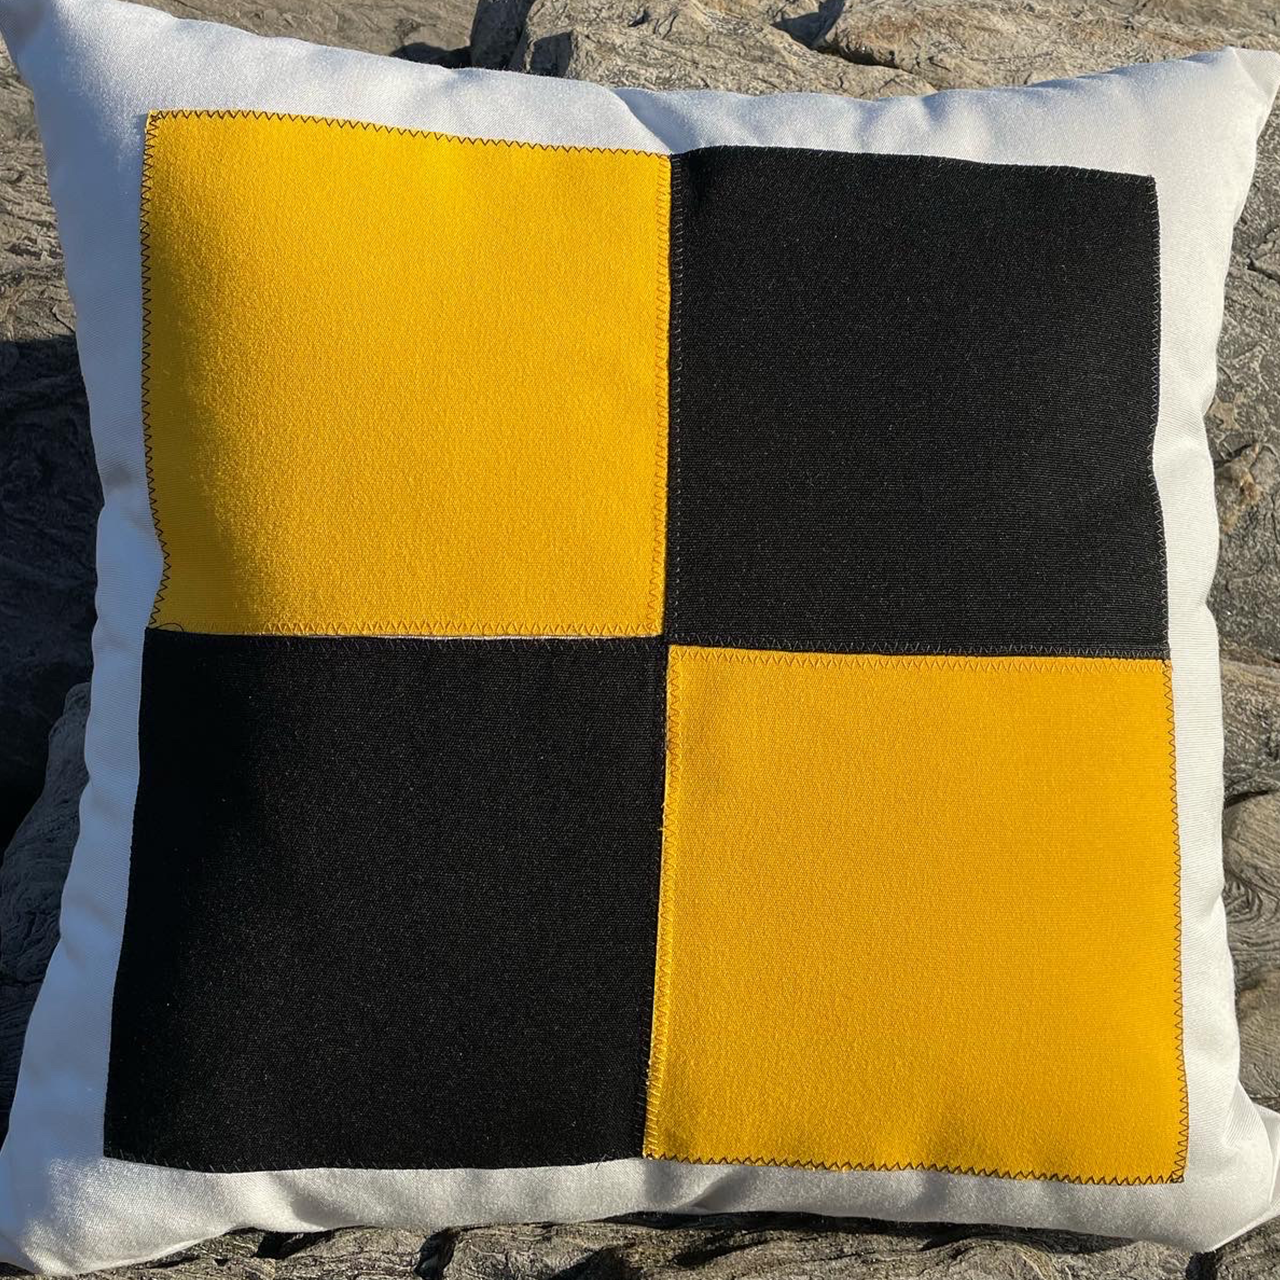 L (Lima) - Code Flag Pillow